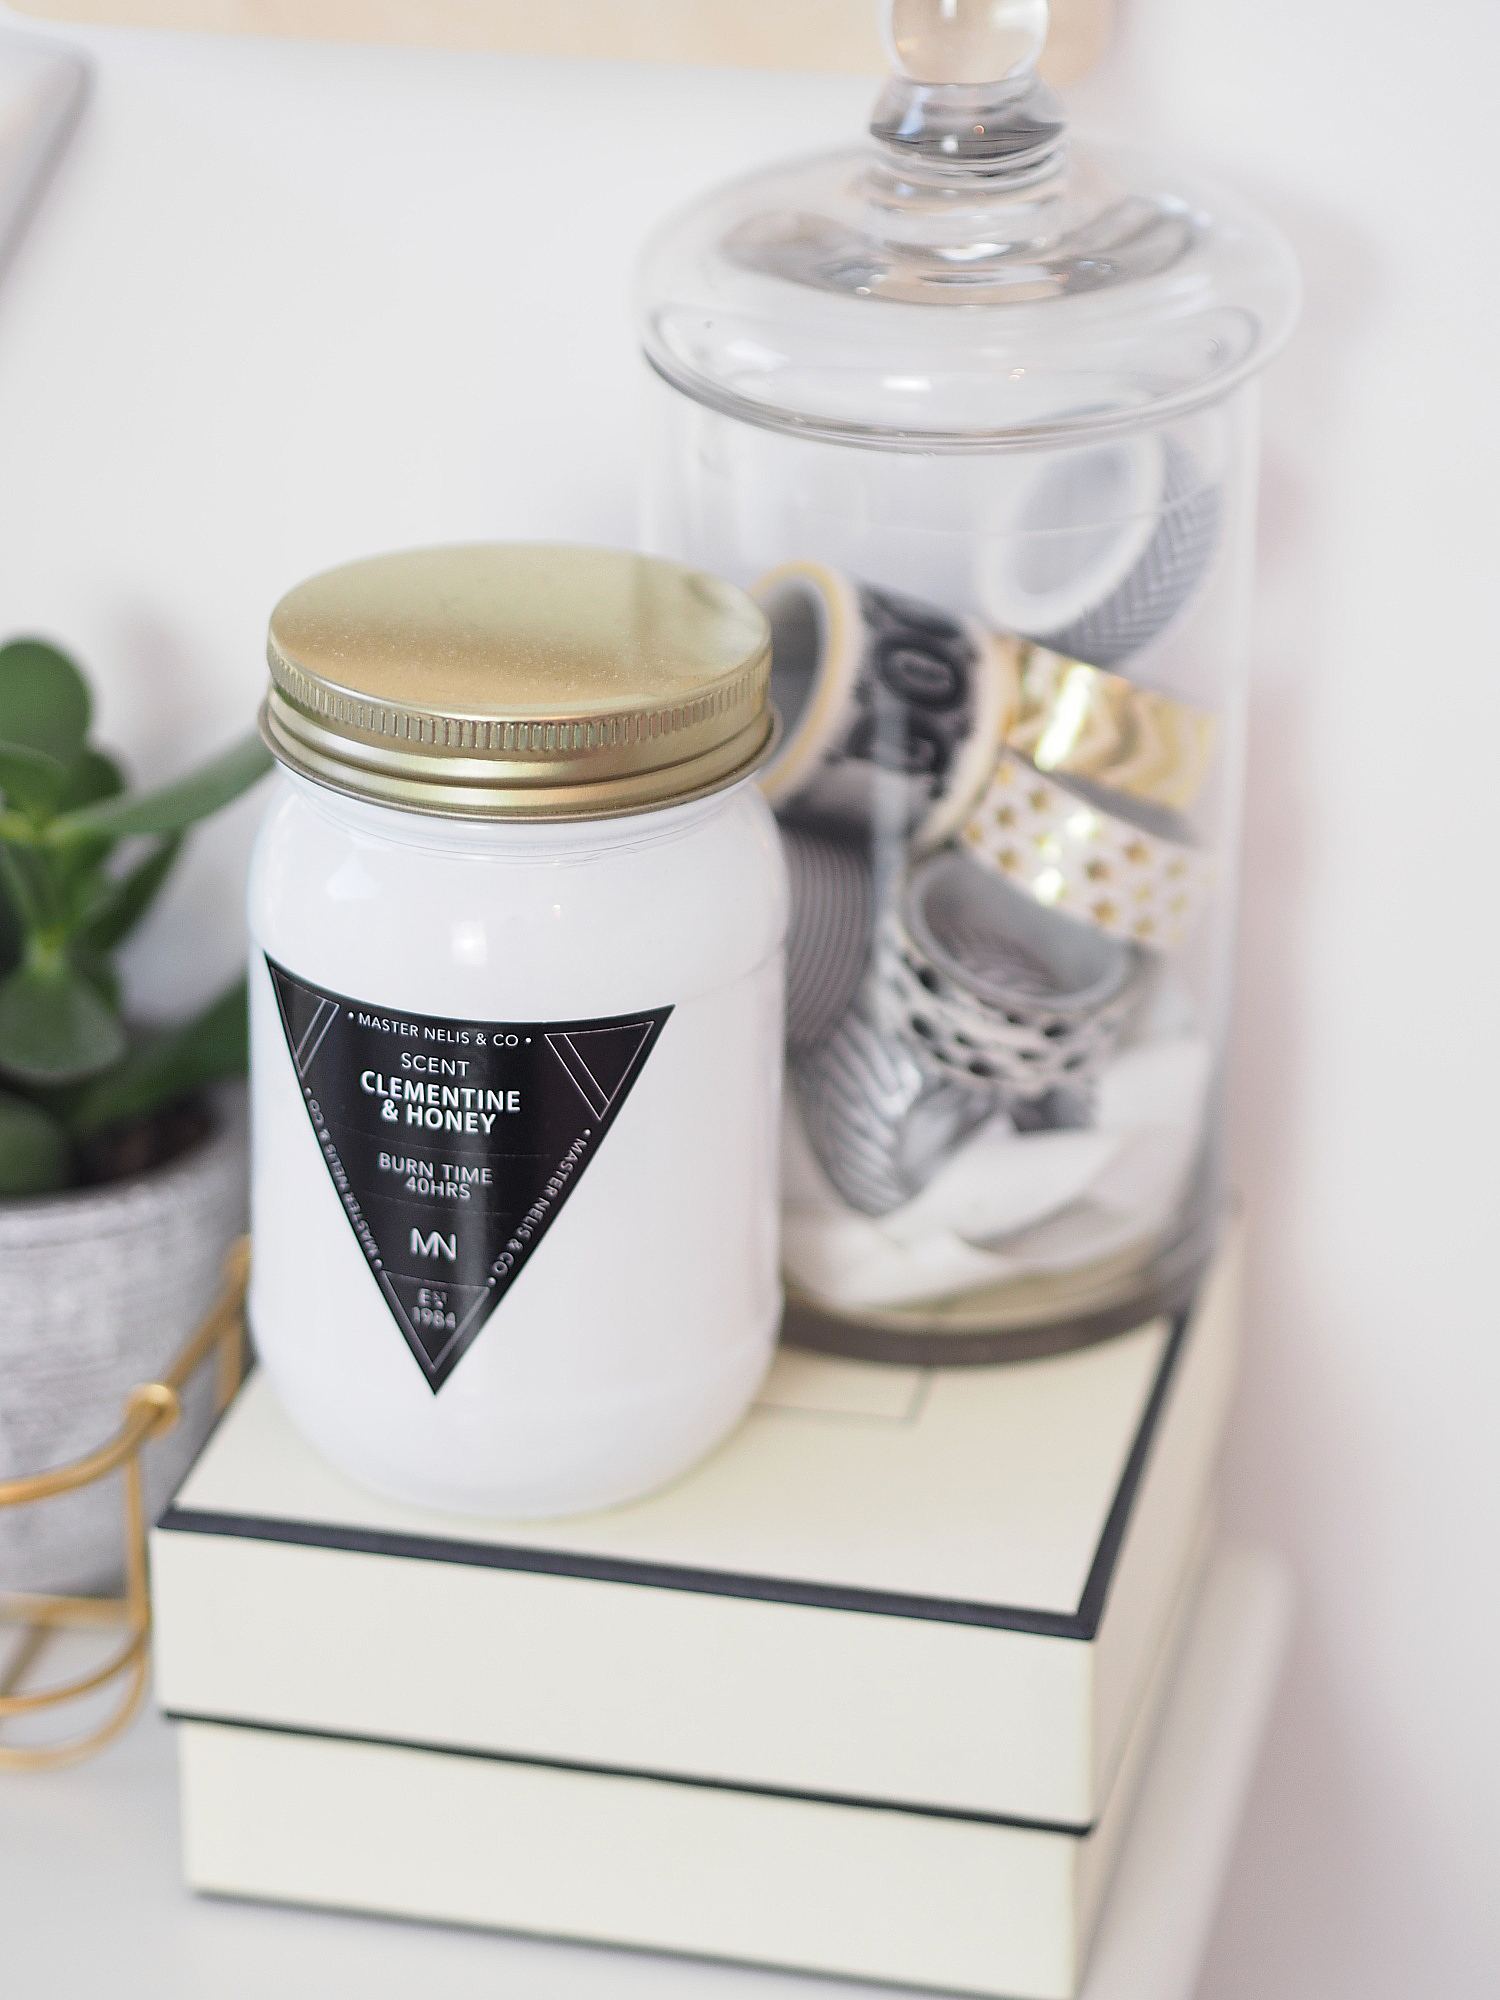 primark candle and glass storage jar